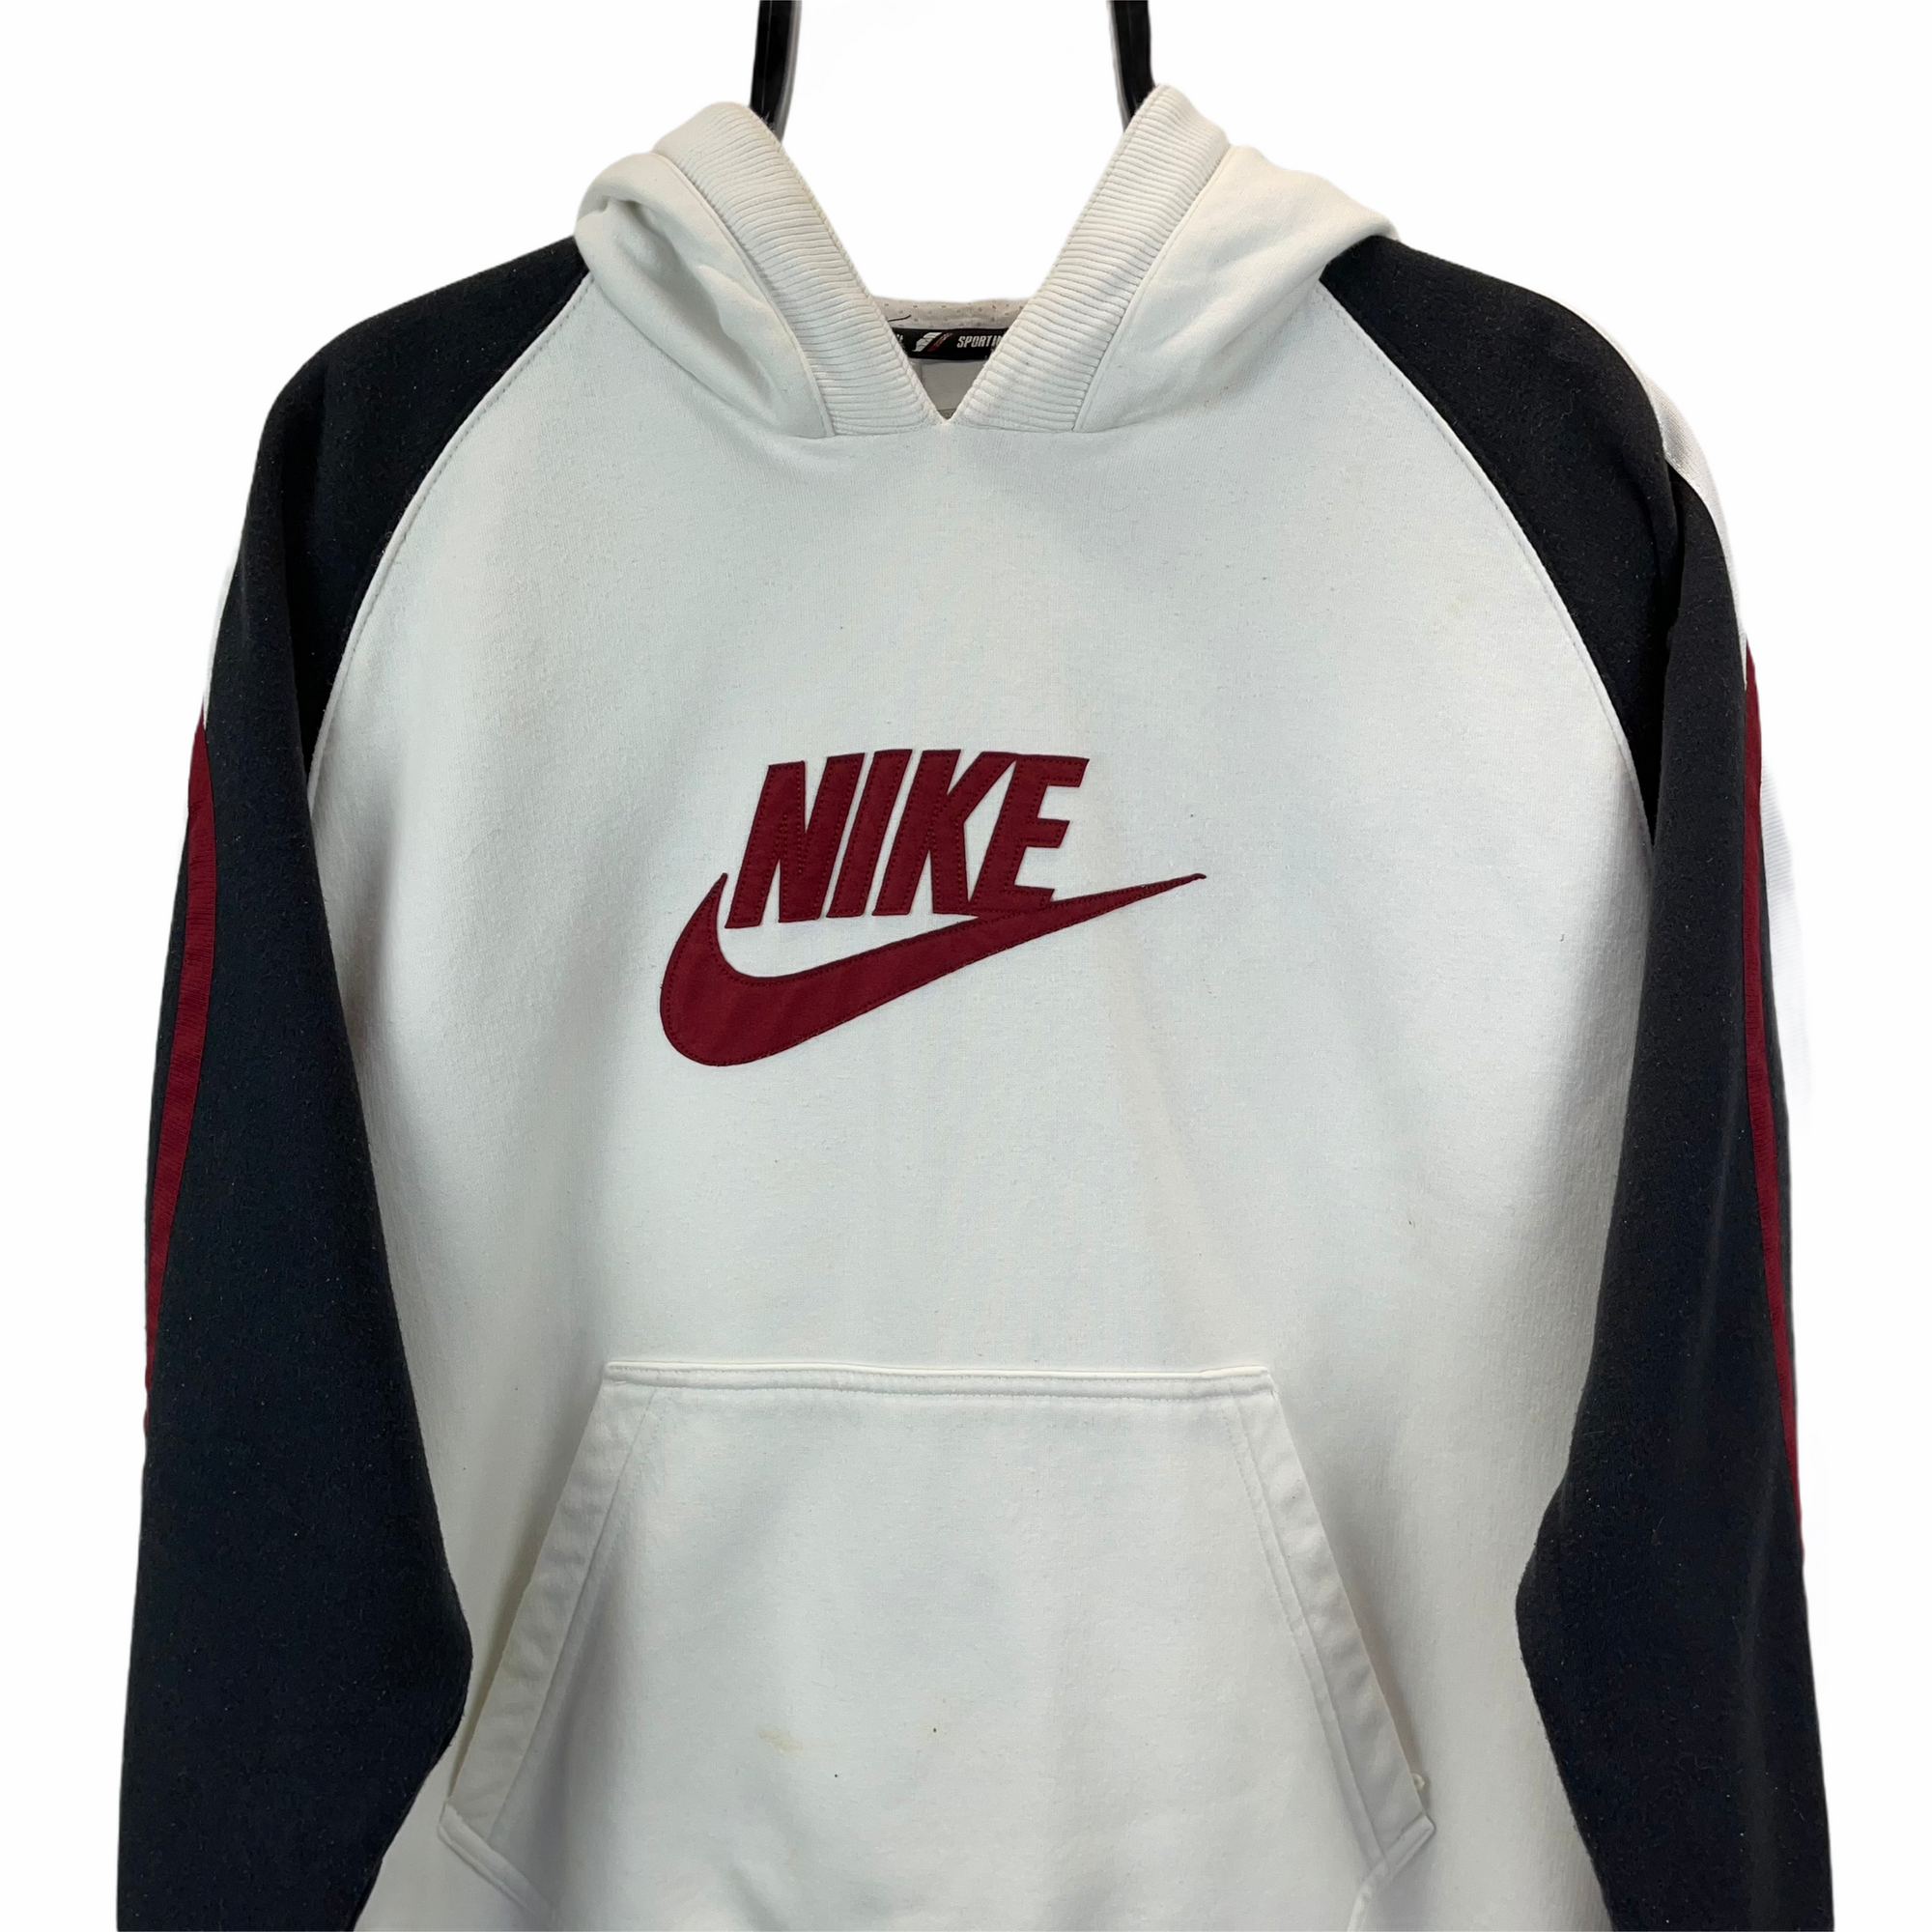 Vintage Nike Spellout Hoodie in White, Red & Black - Men's Medium/Women's Large